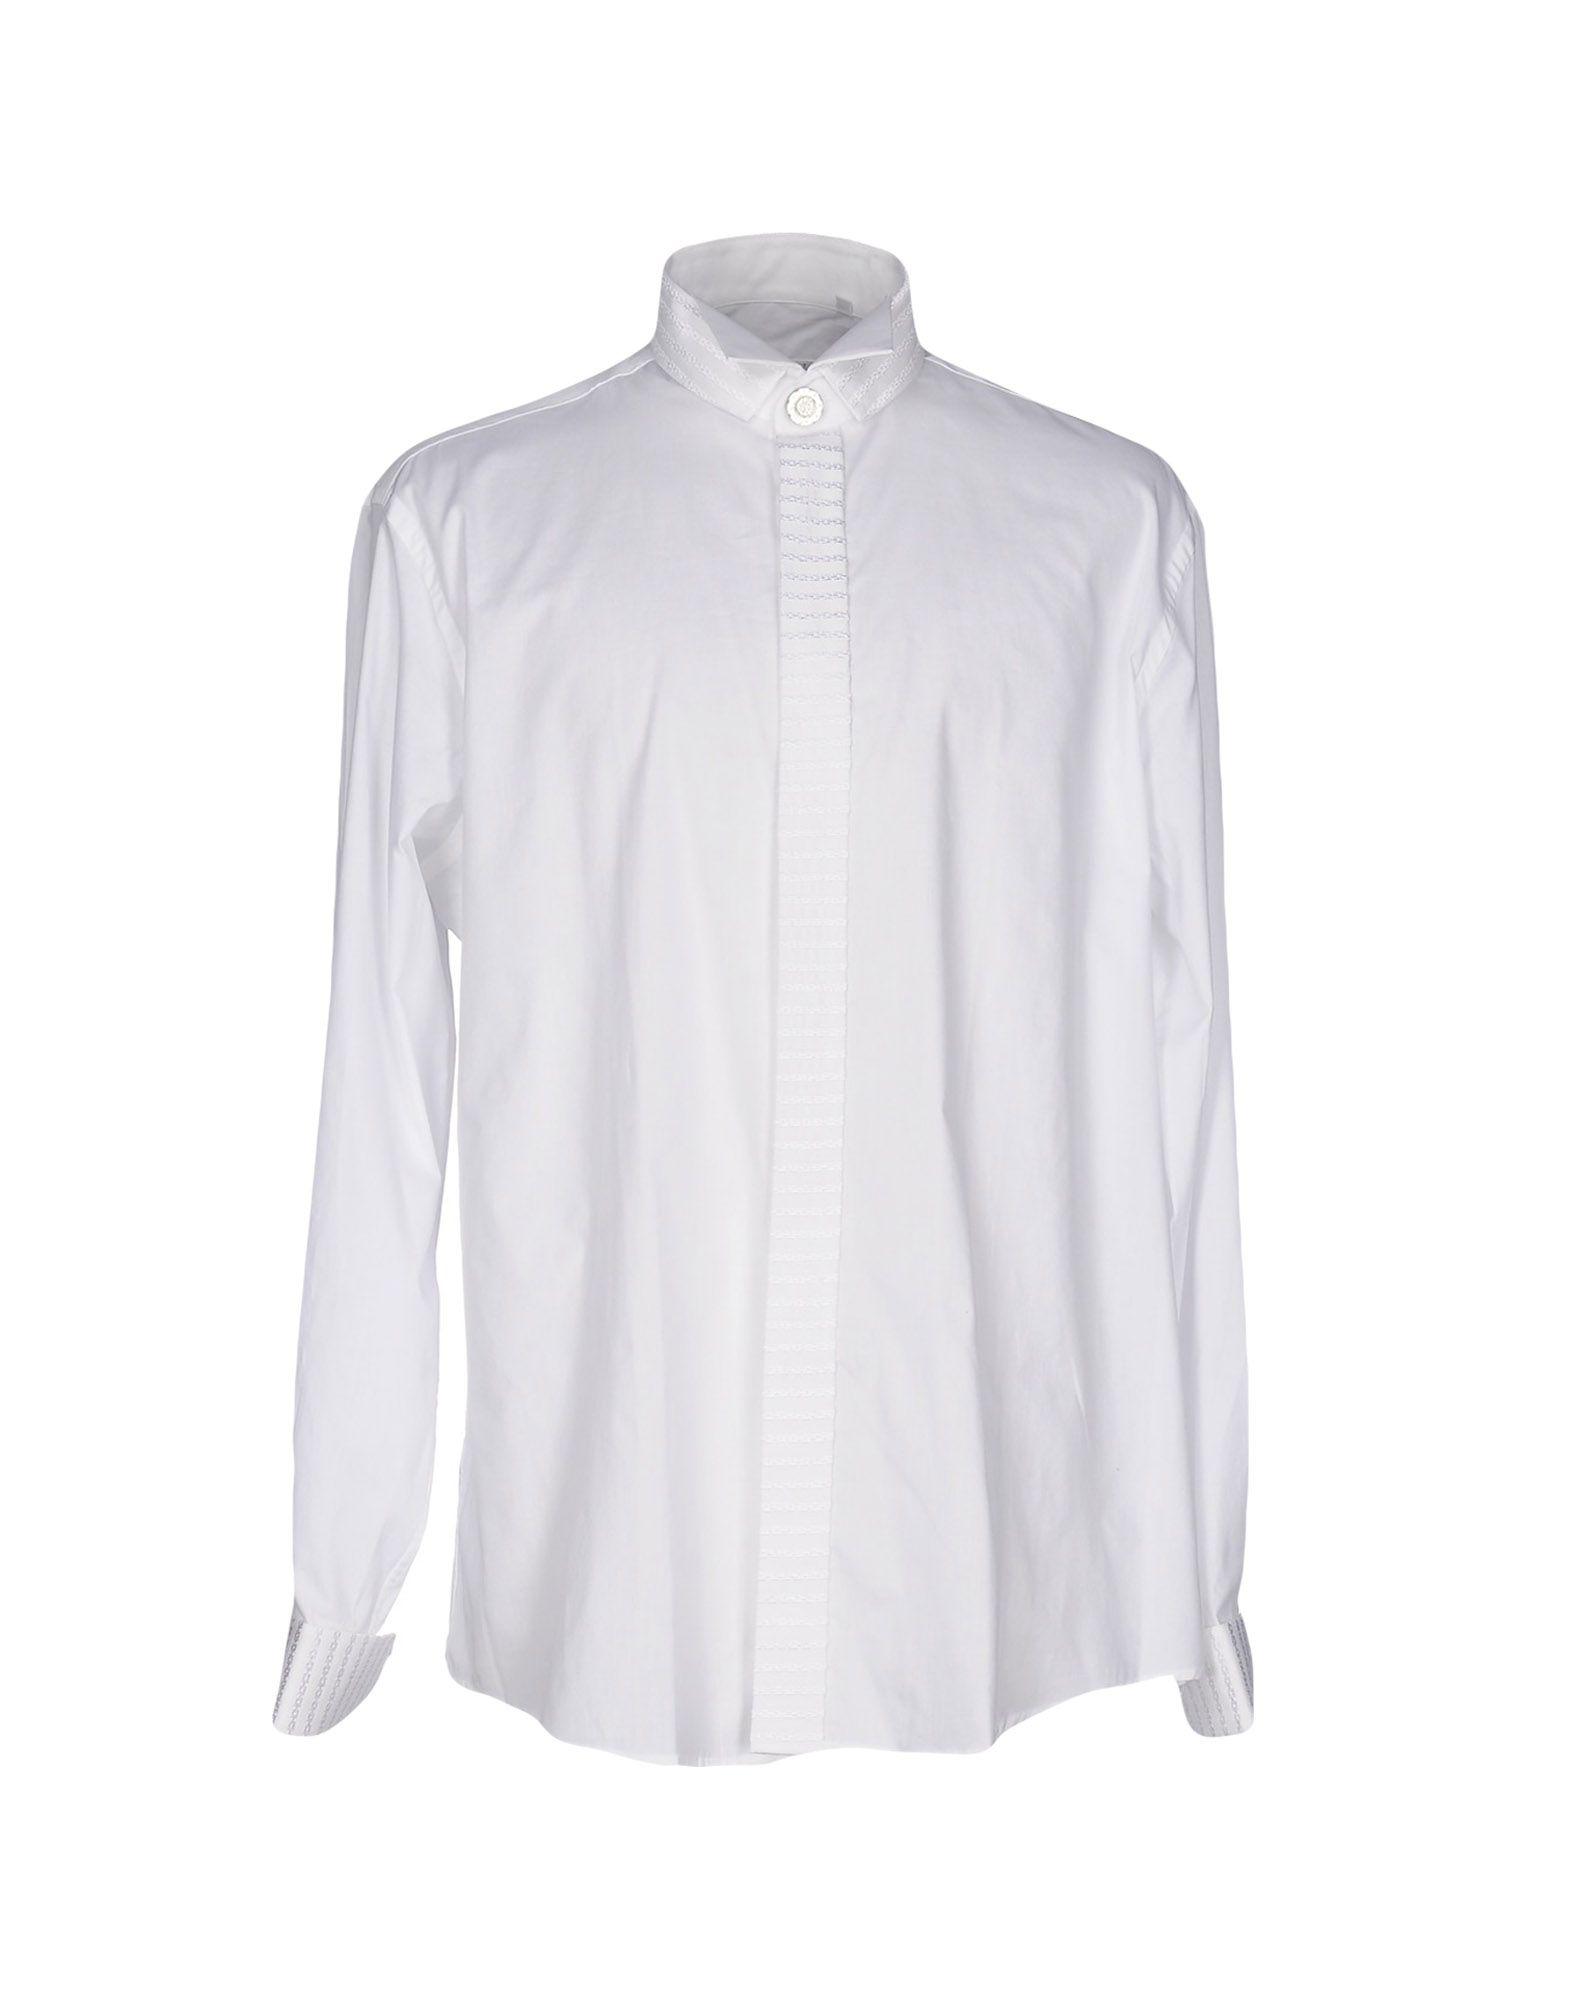 Pal Zileri Cotton Shirt in White for Men - Lyst